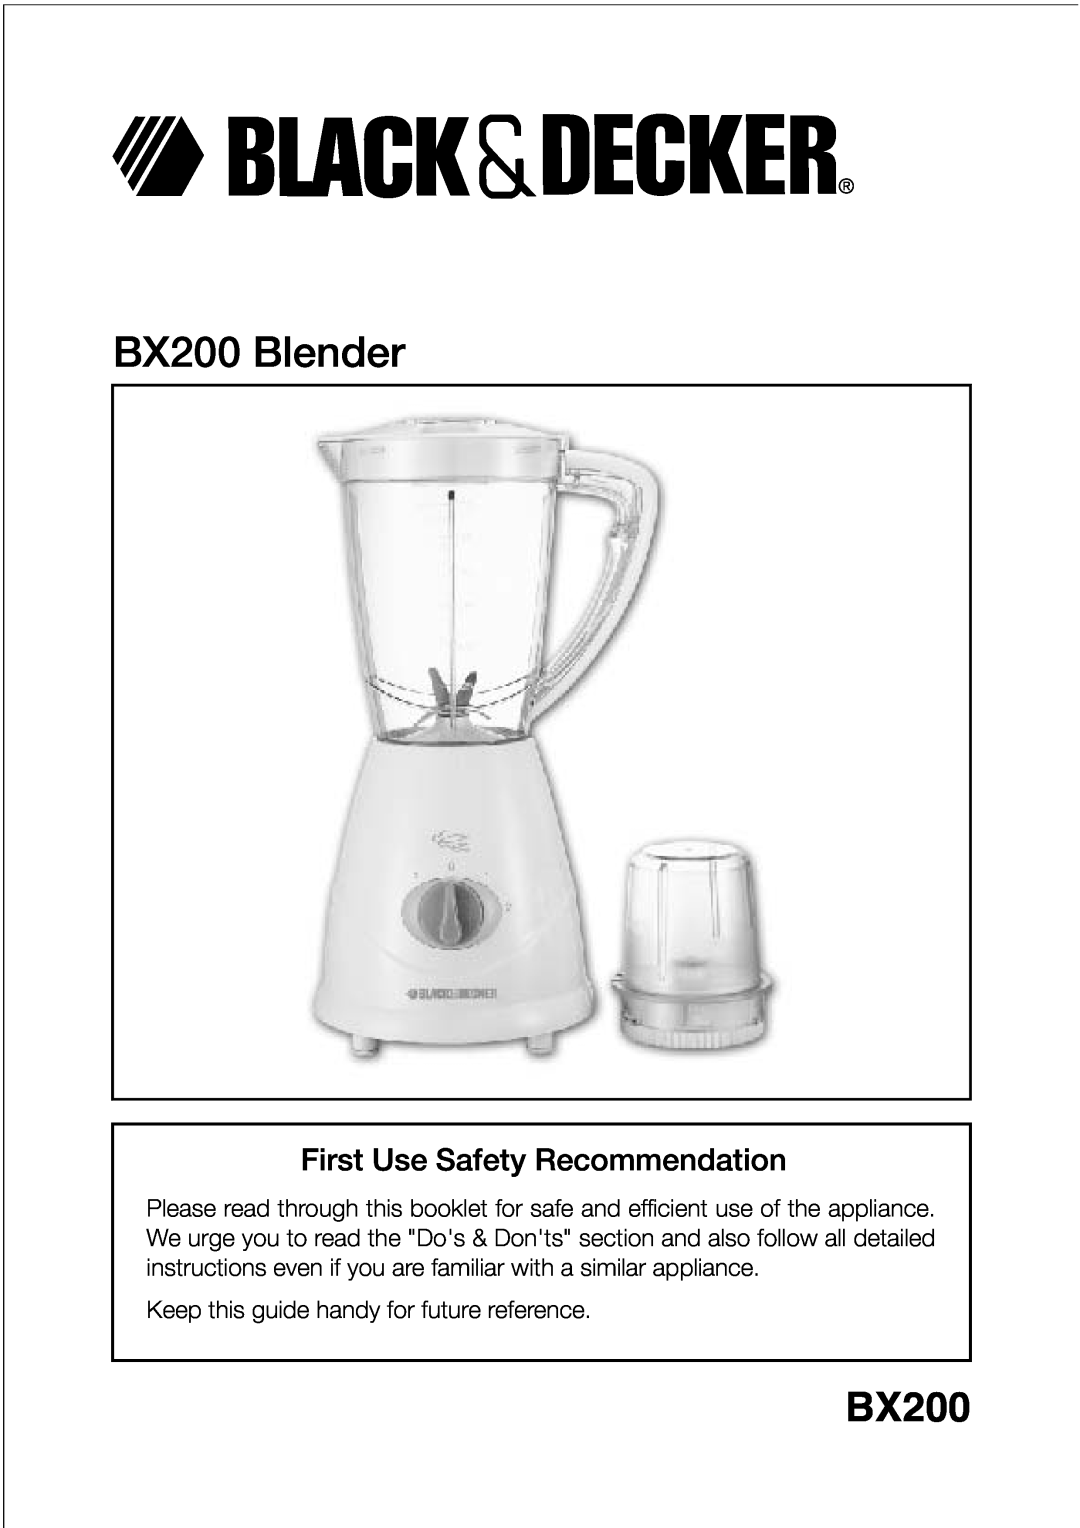 Black & Decker manual BX200 Blender, First Use Safety Recommendation 